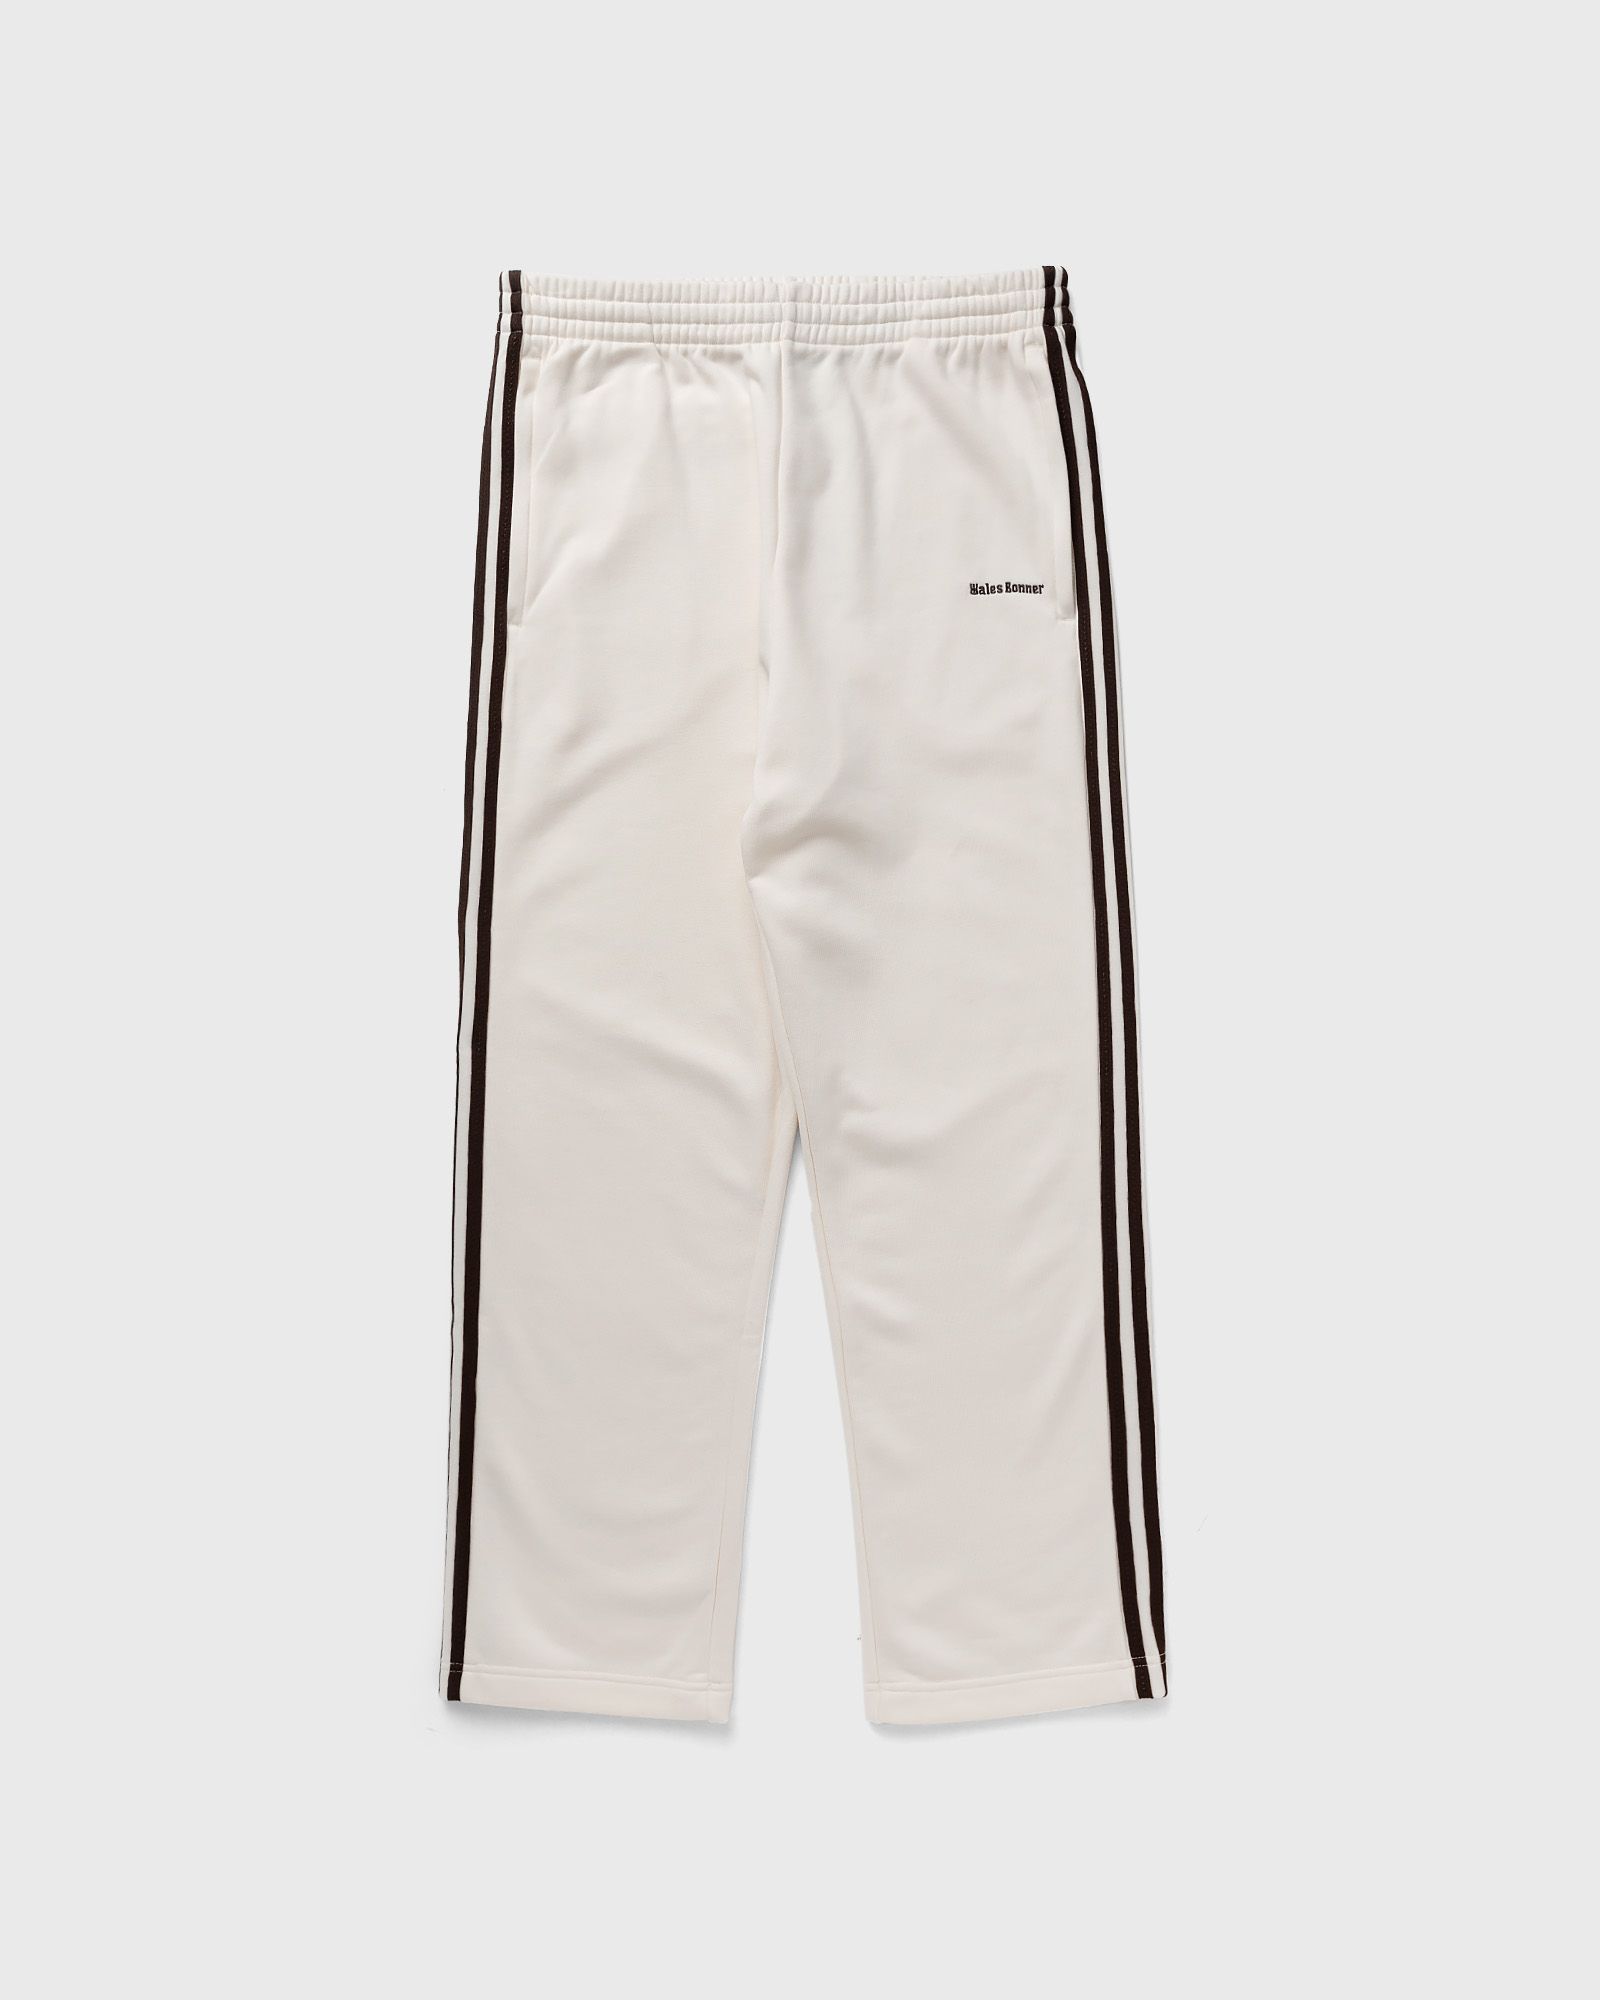 Adidas - x wales bonner trackpant men track pants white in größe:xl